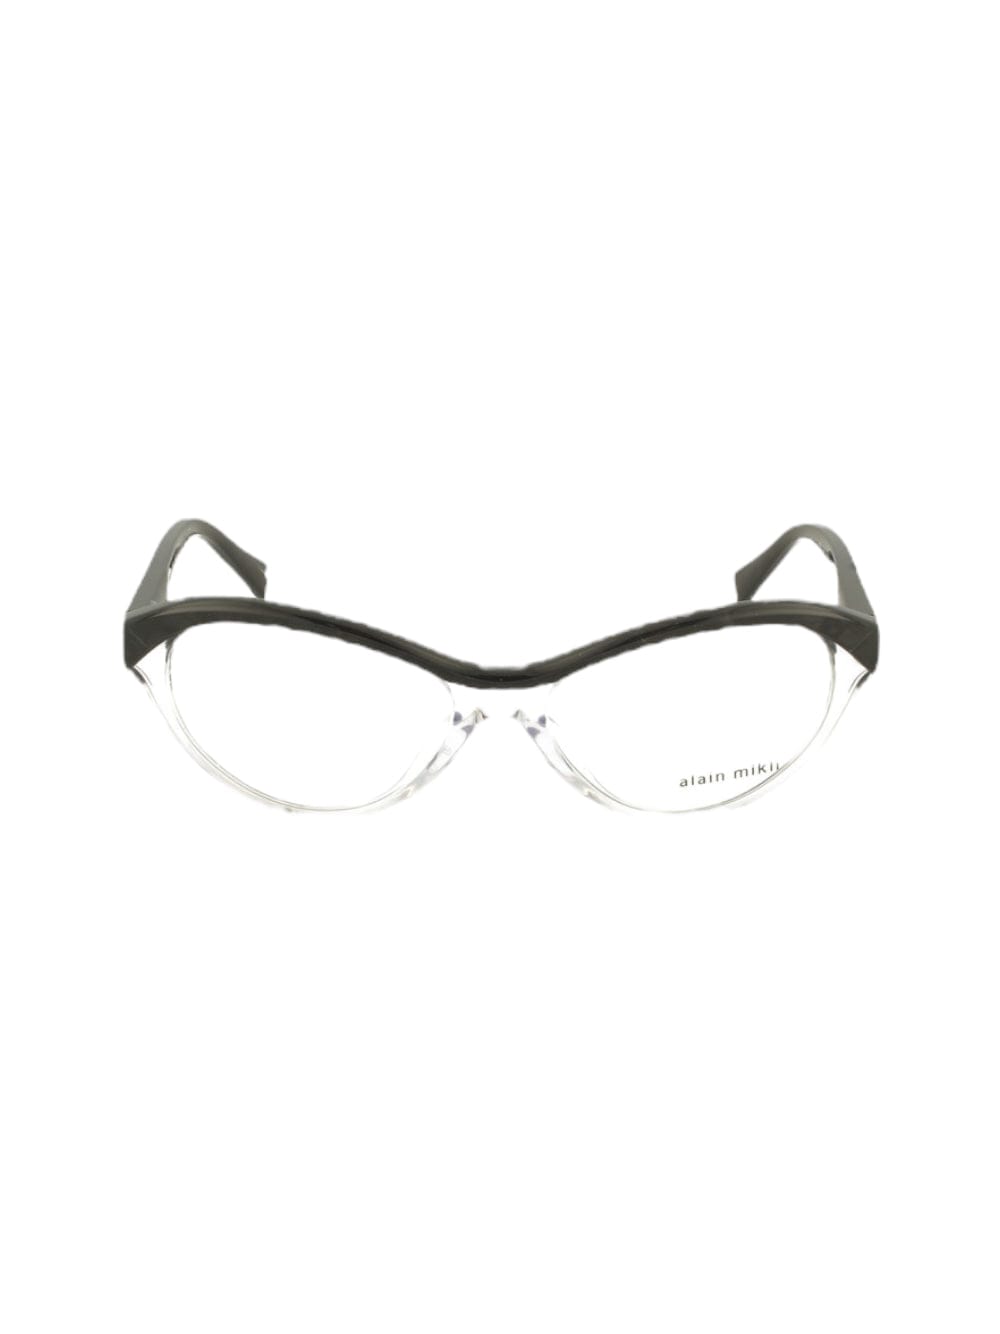 Leandre - A0312b - Black / Crystal Glasses